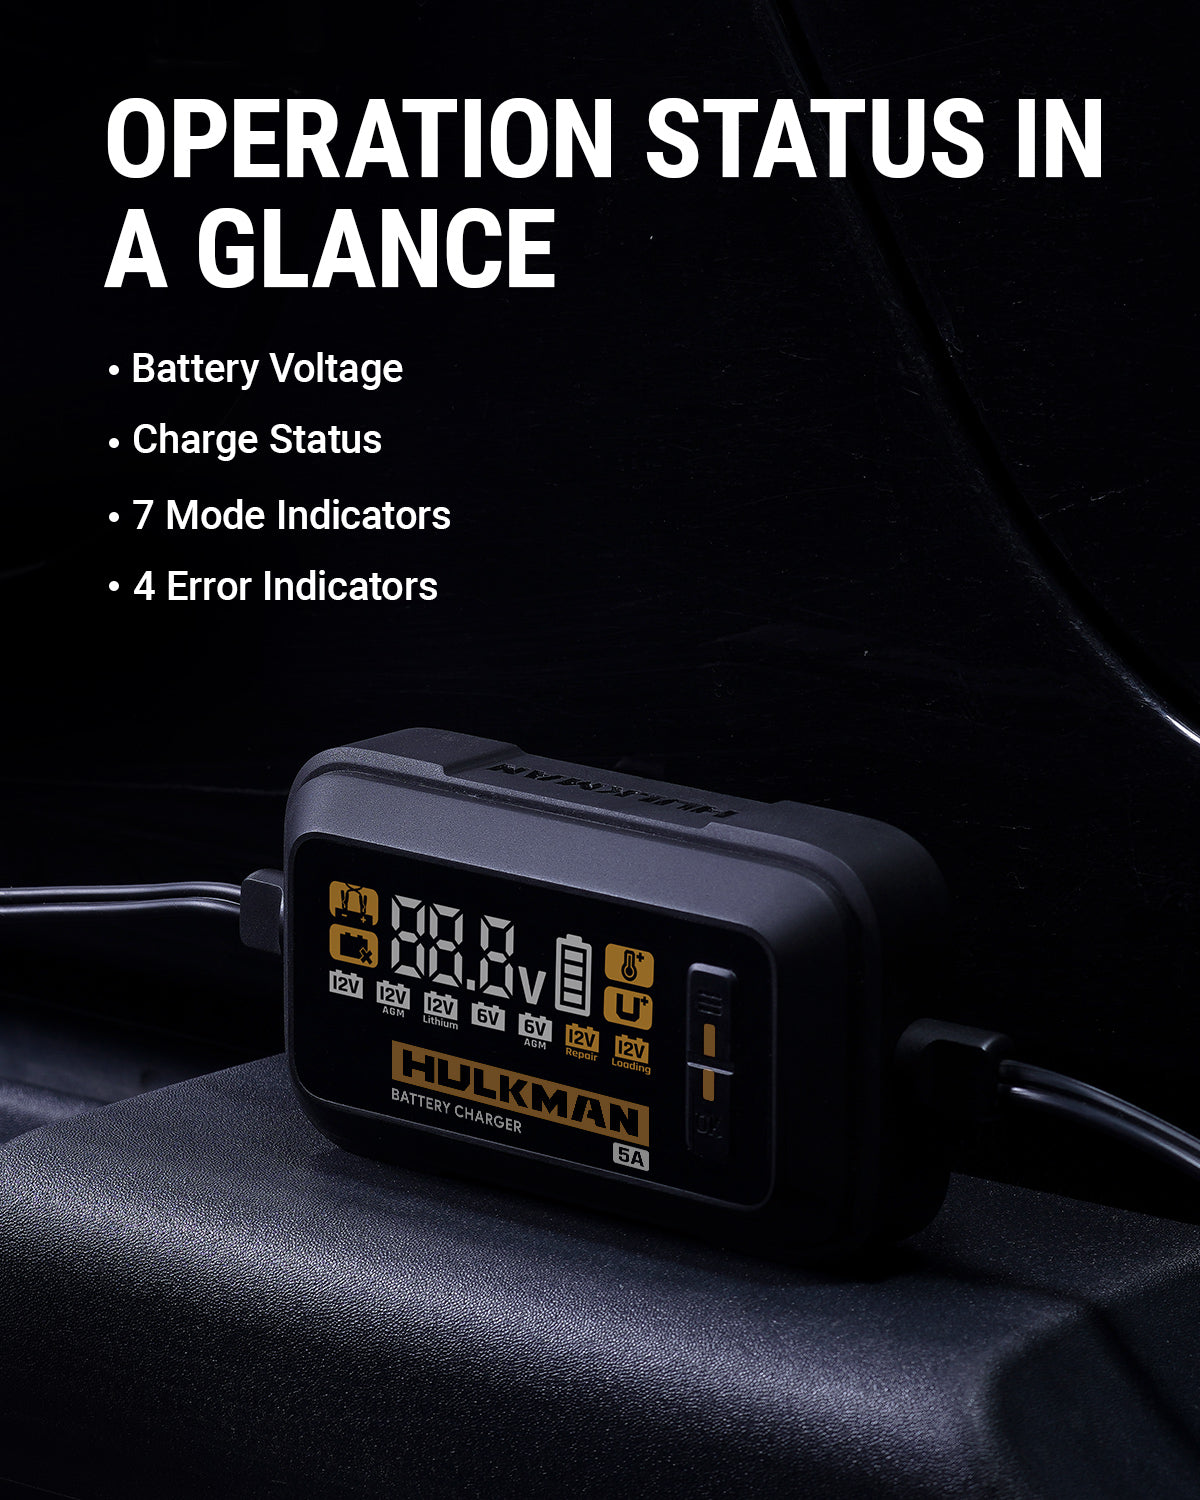 HULKMAN Sigma 5 Battery Trickle Charger, 5A 6V/12V Automatic Smart